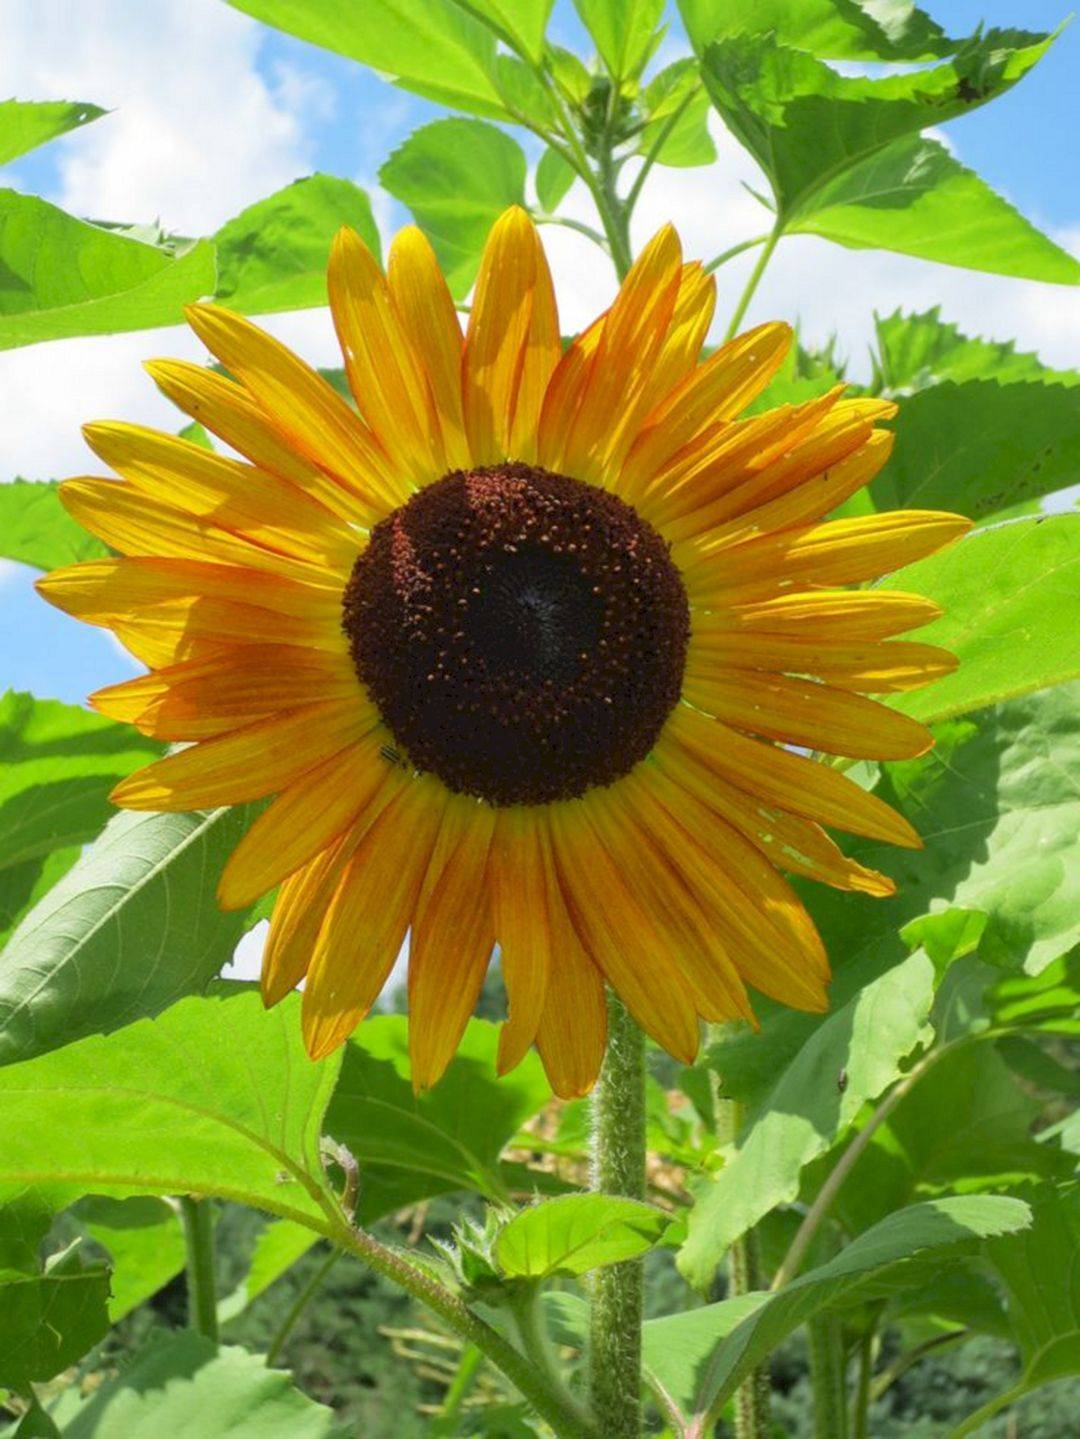 My Beautiful Sunflower